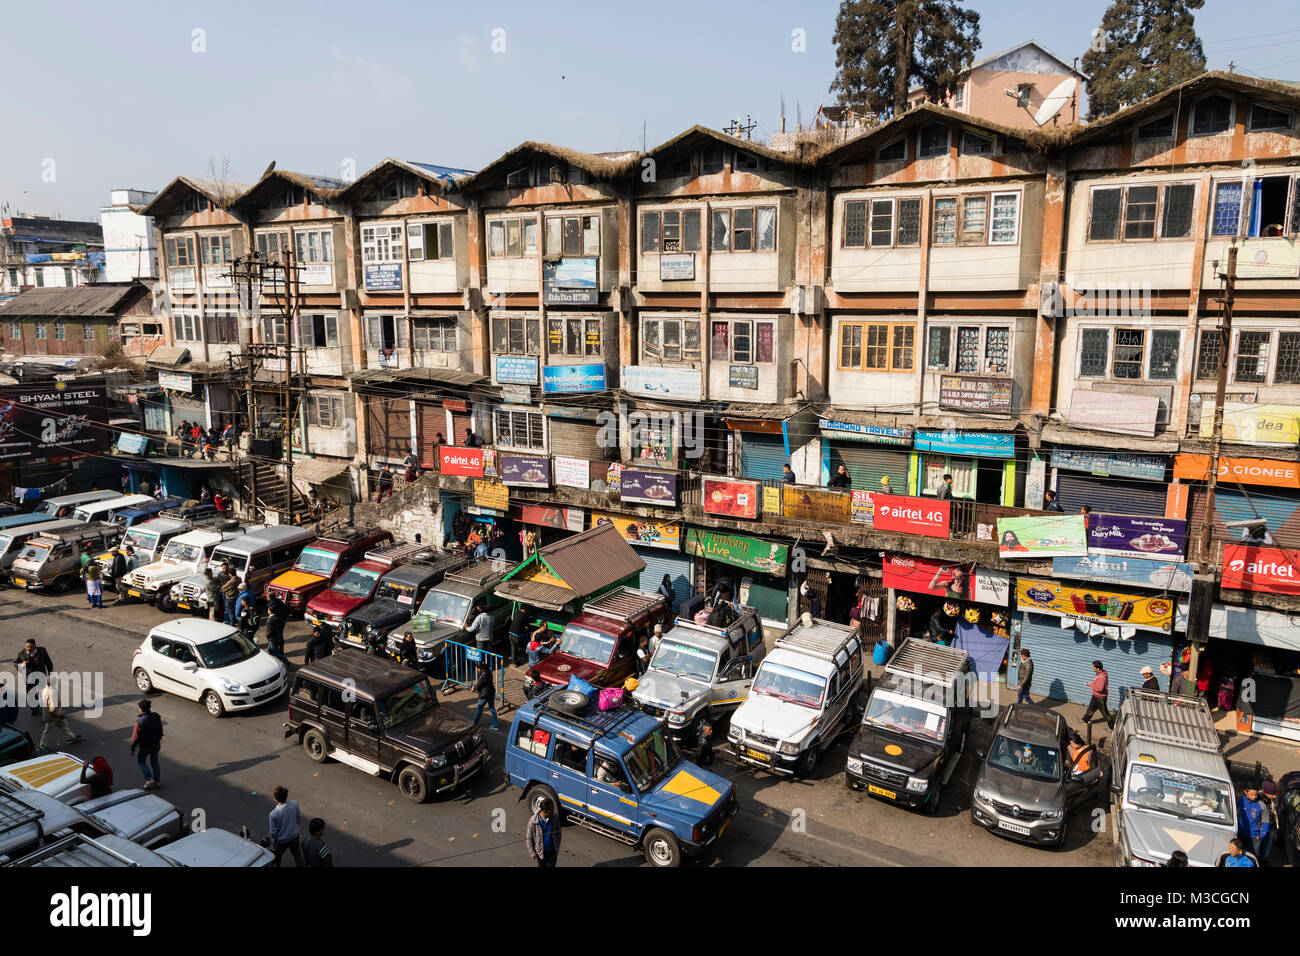 DARJEELING, INDIA, March 6 2017: View of Darjeeling Bus station in west bengal, India Stock Photo